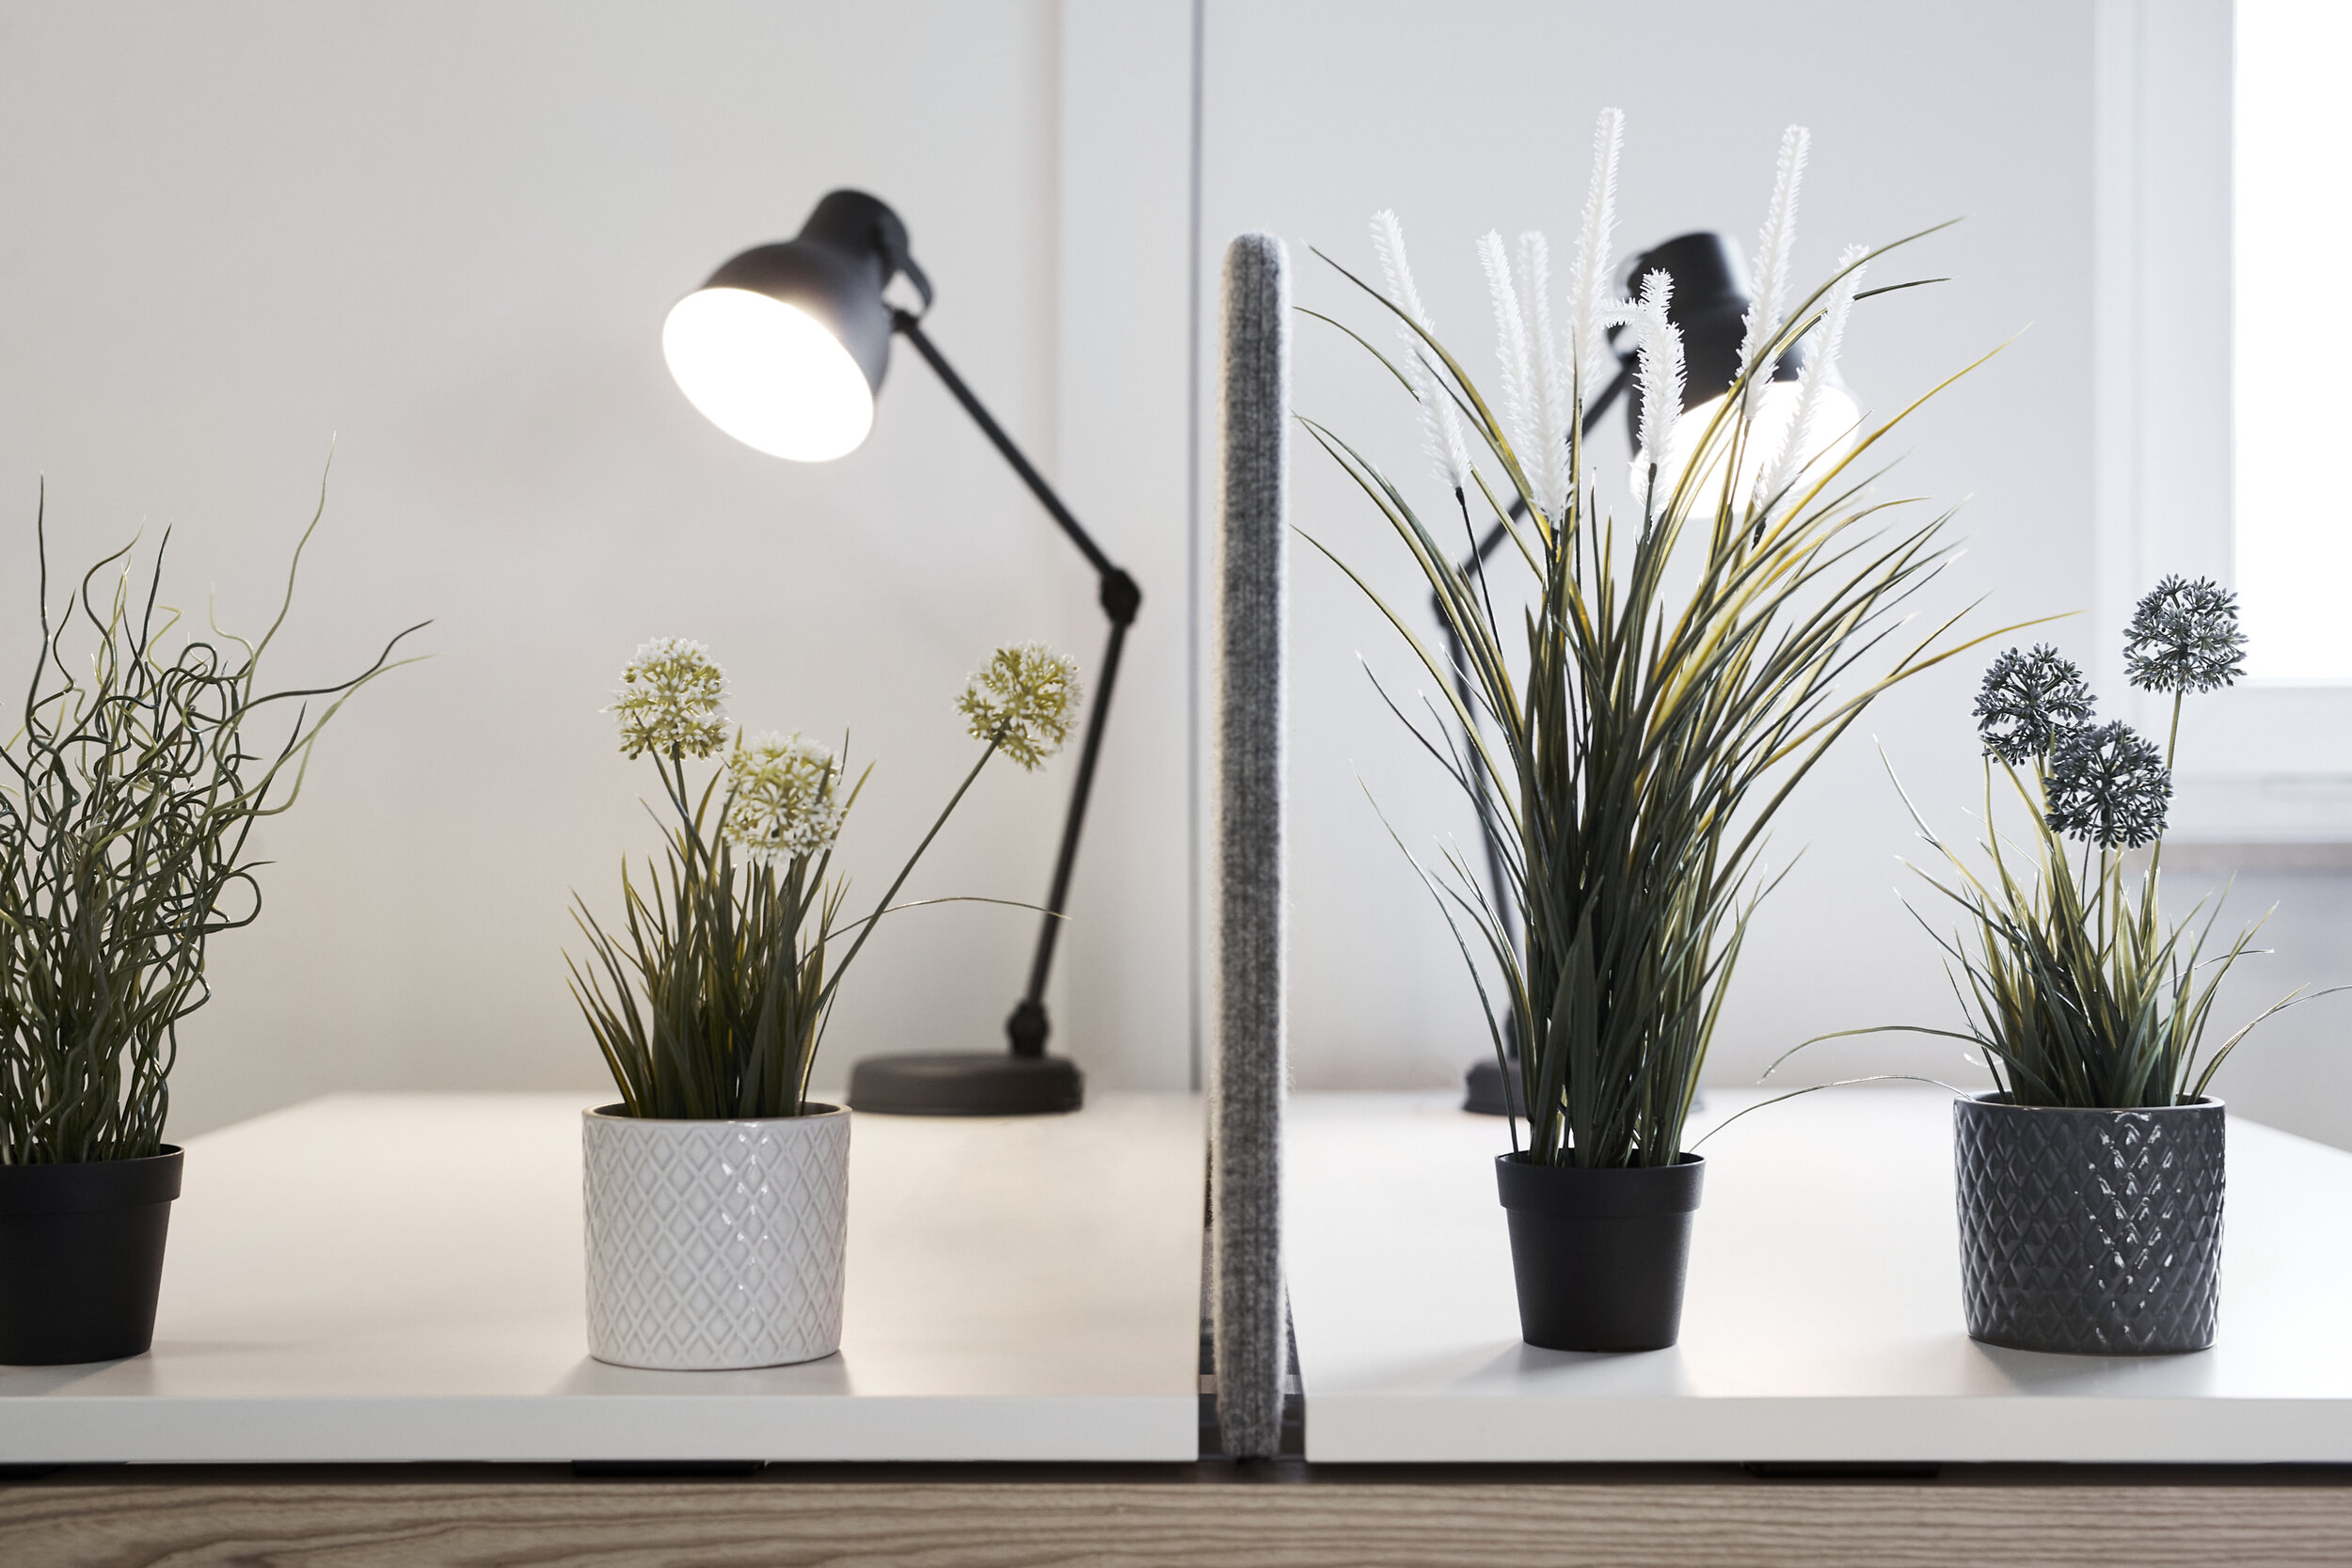 Lampe+Pflanzen.jpg